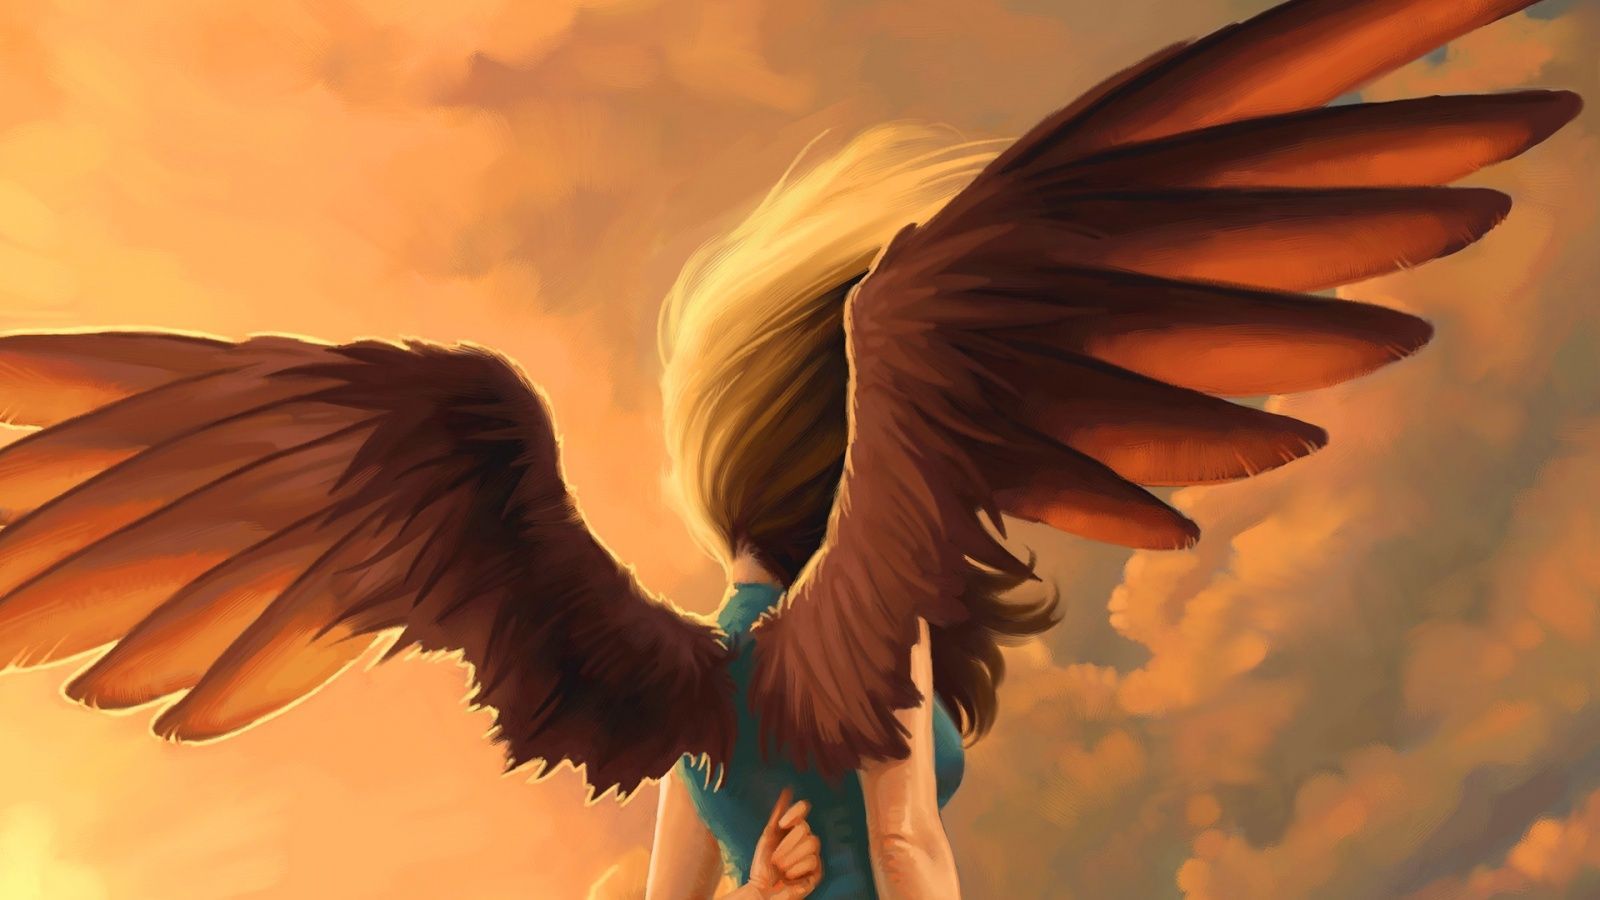 Fantasy girl with wings Wallpaper in 1600x900. Wings wallpaper